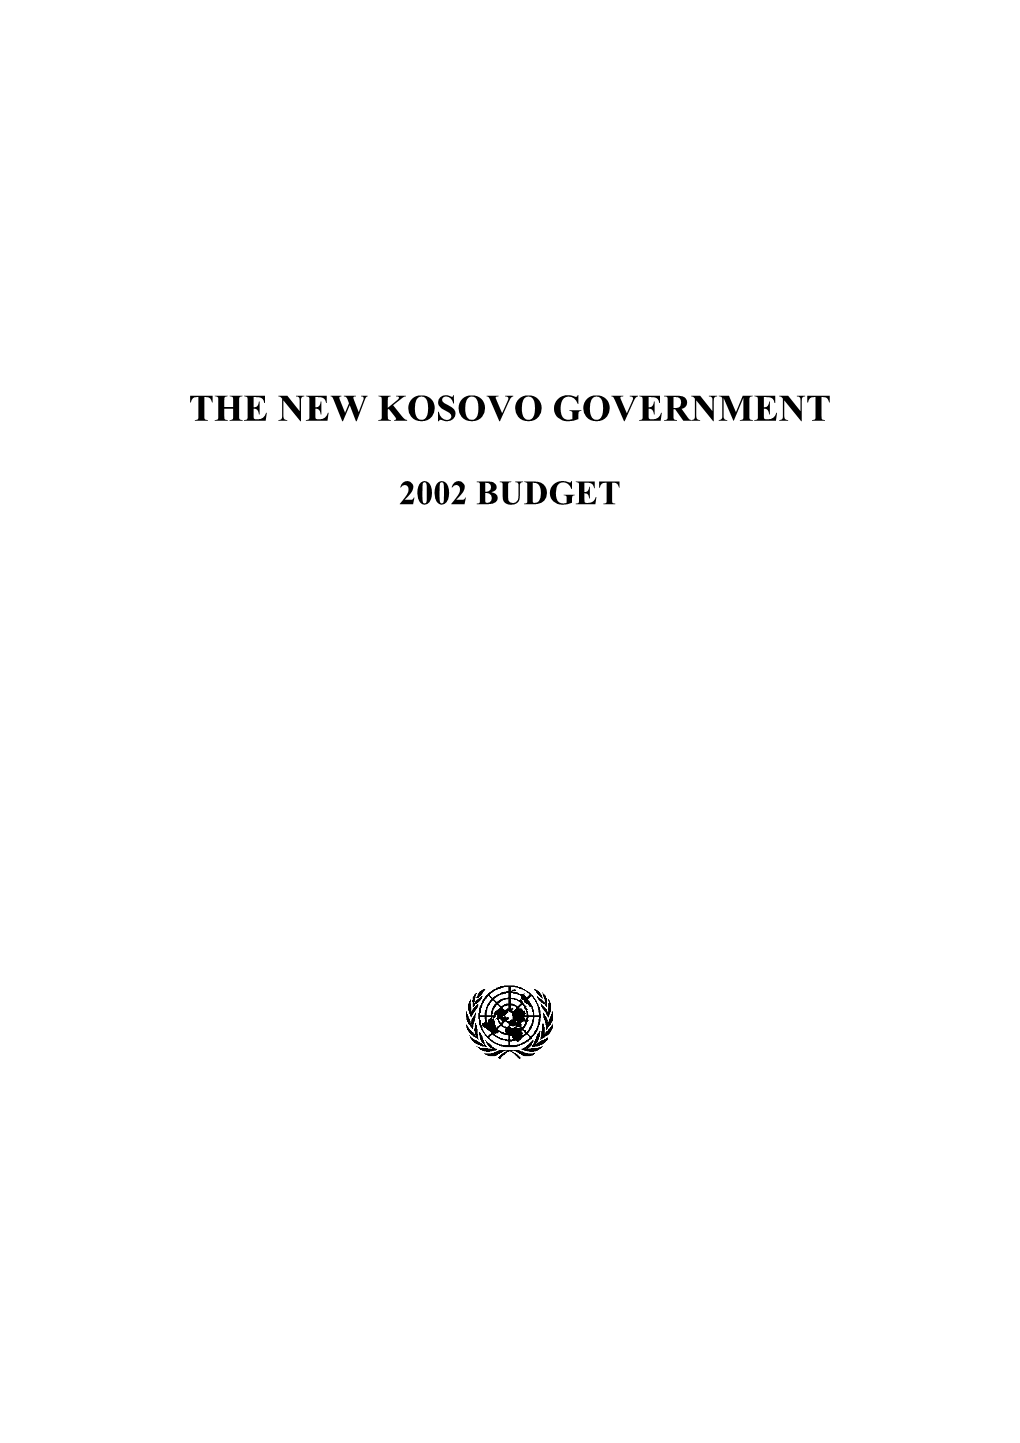 2002 Kosovo Budget Overview